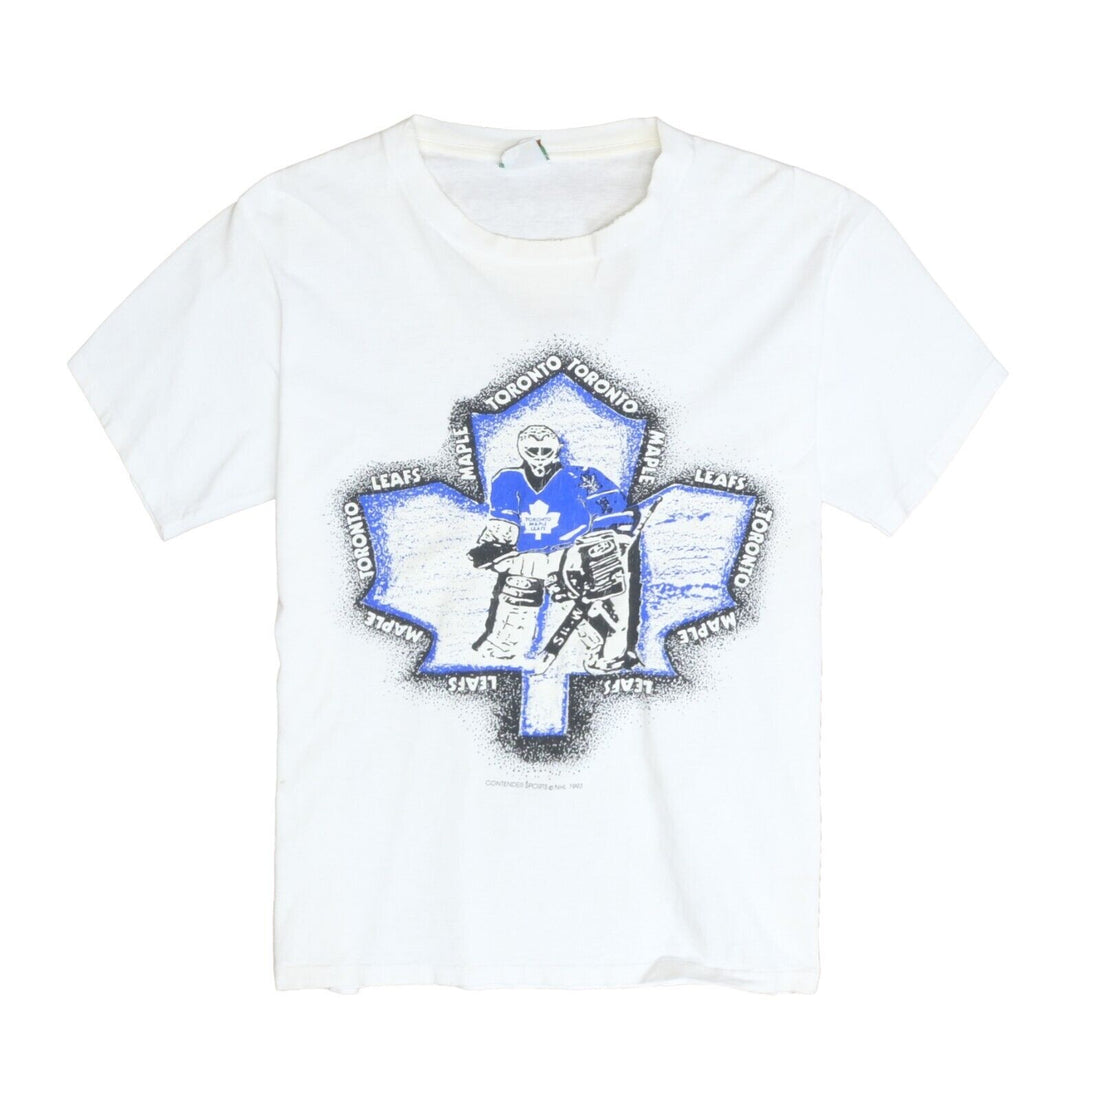 Vintage Toronto Maple Leafs Goalie T-Shirt Size Medium White 1993 90s NHL